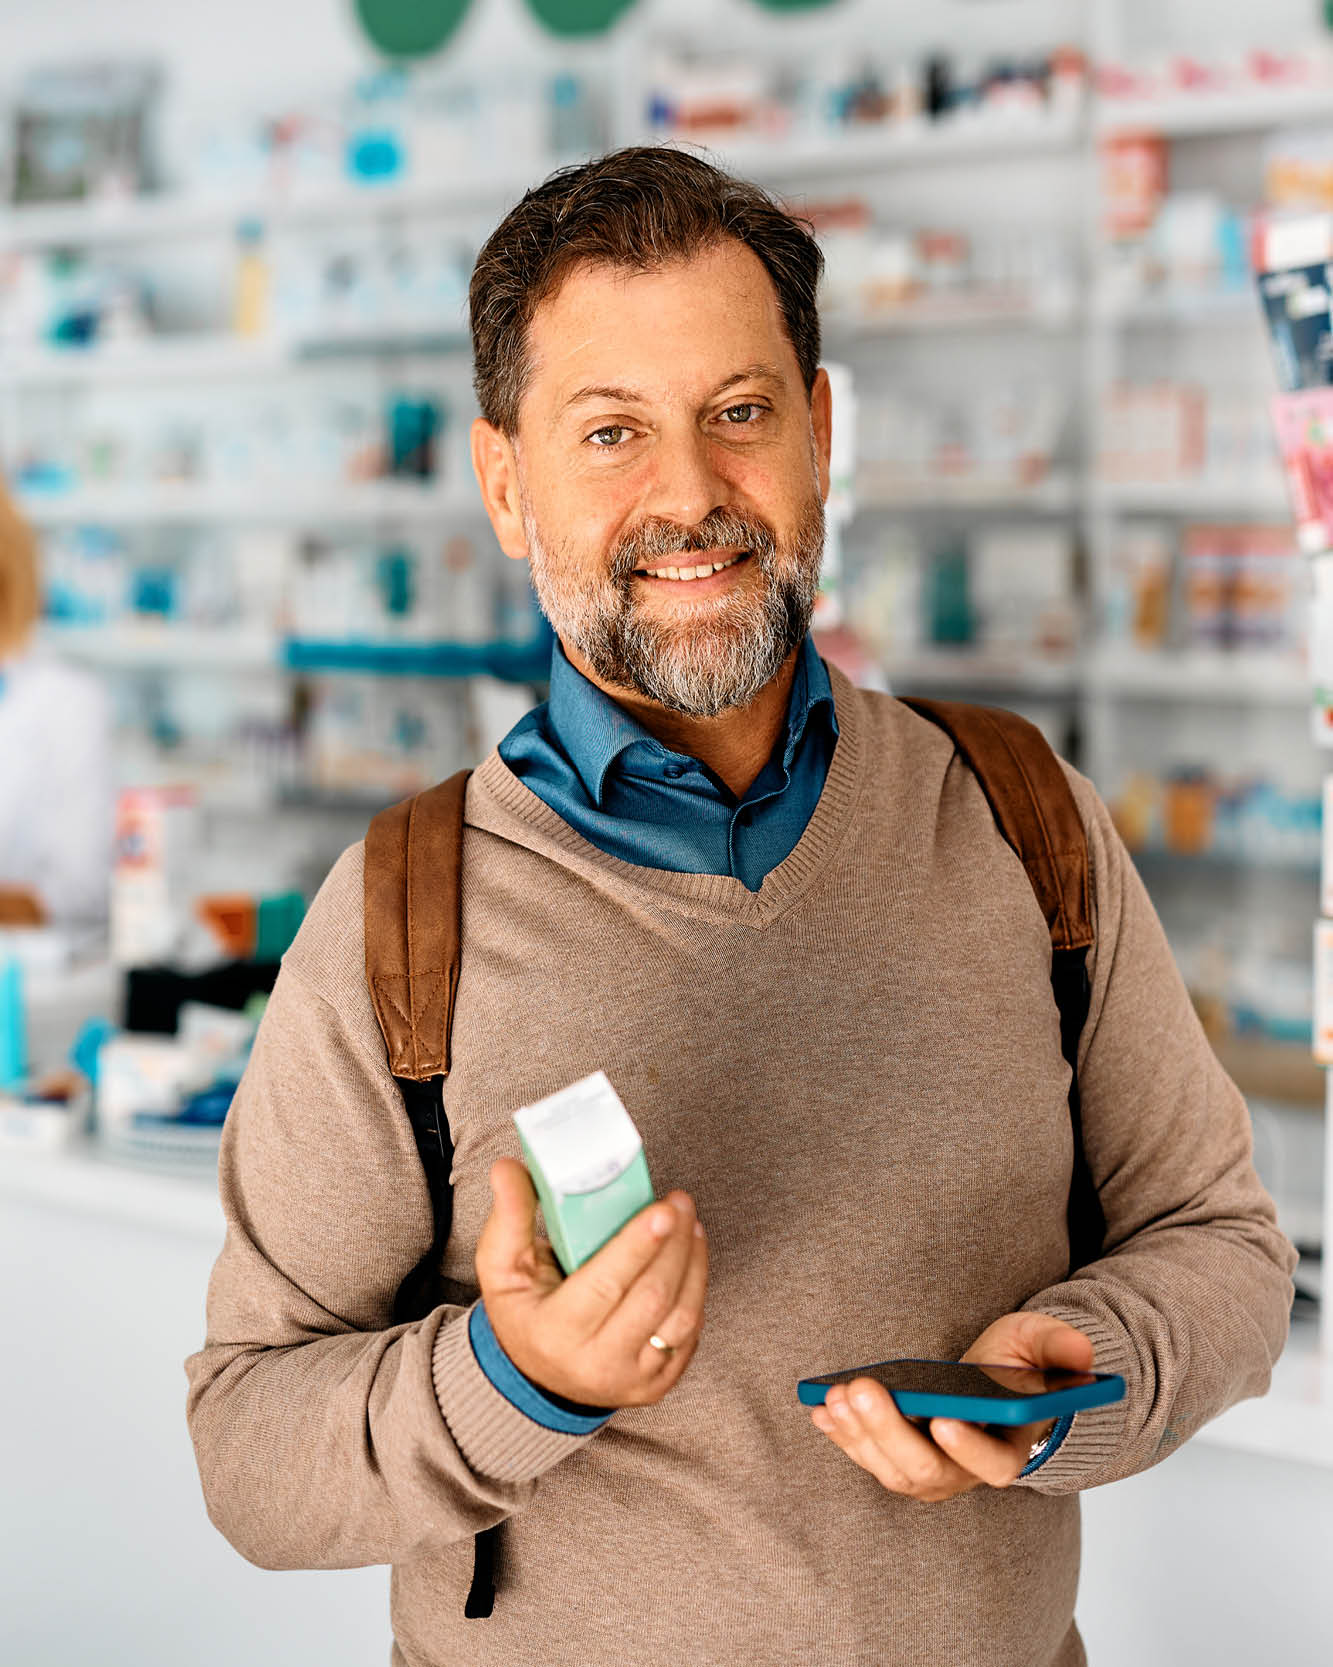 Man shopping in drugstore holding mobile phone